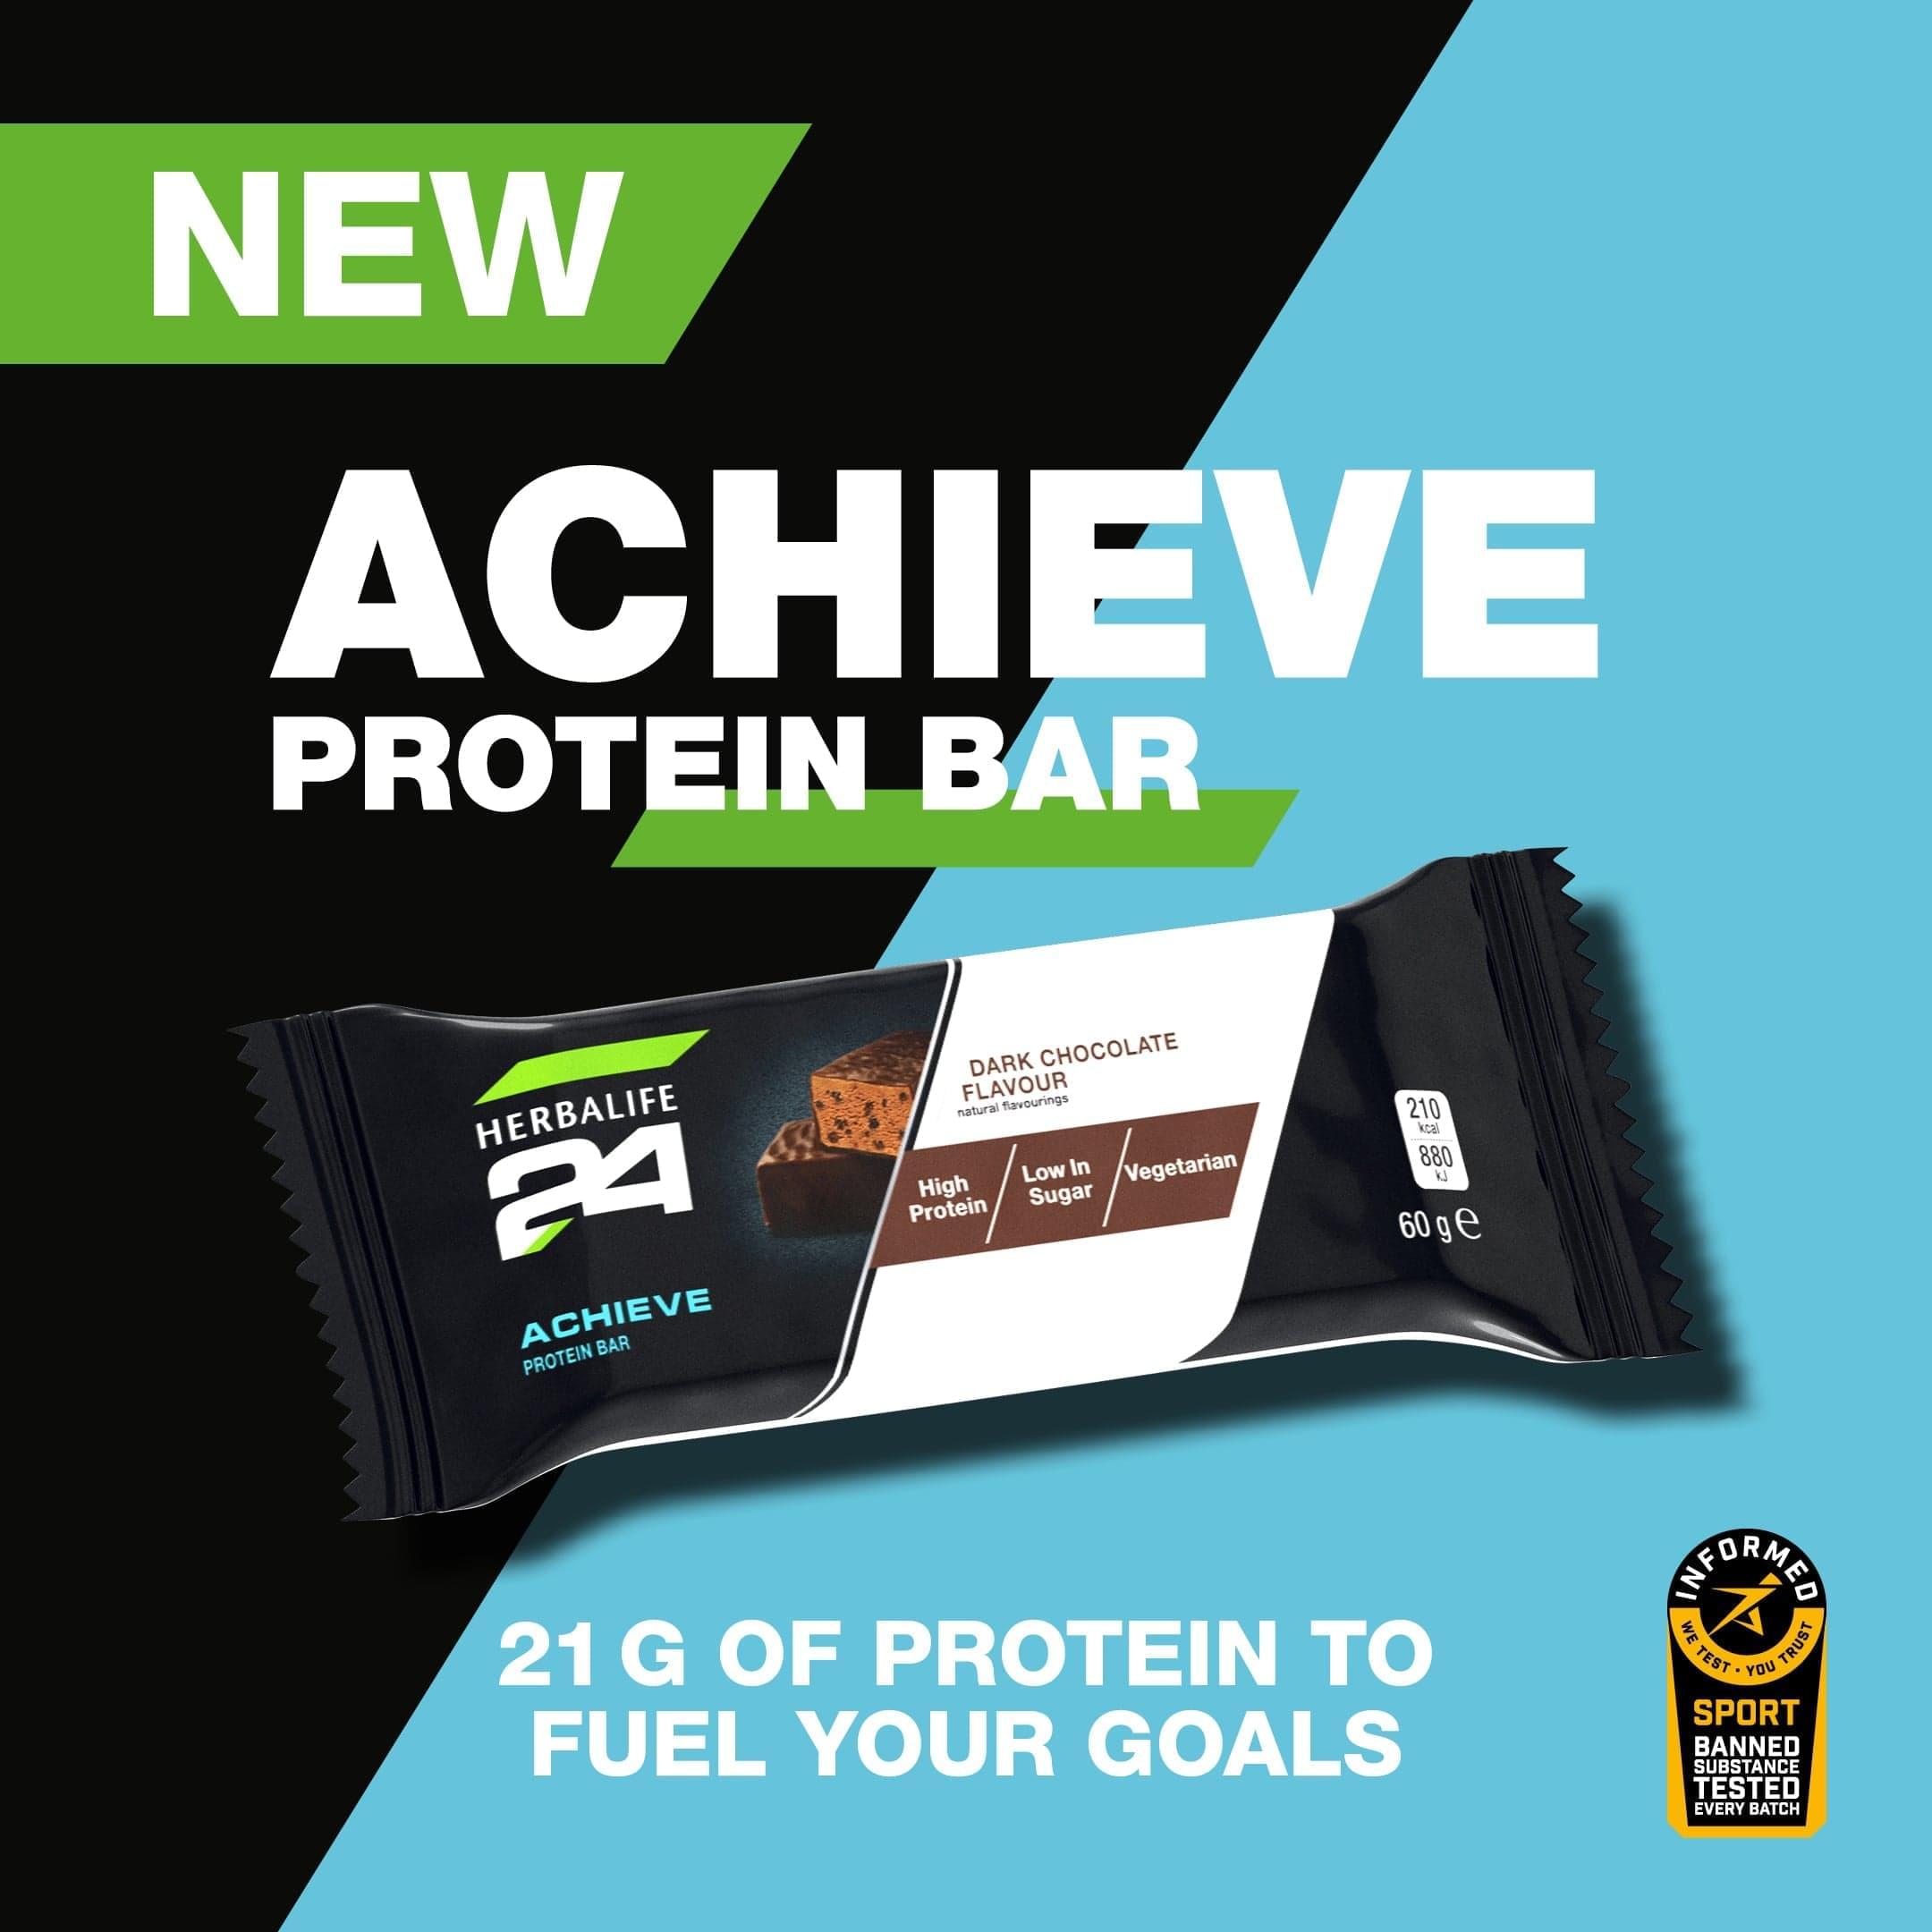 Achieve Protein Bars- 6 x 60g Dark Chocolate bars HerbaChoices